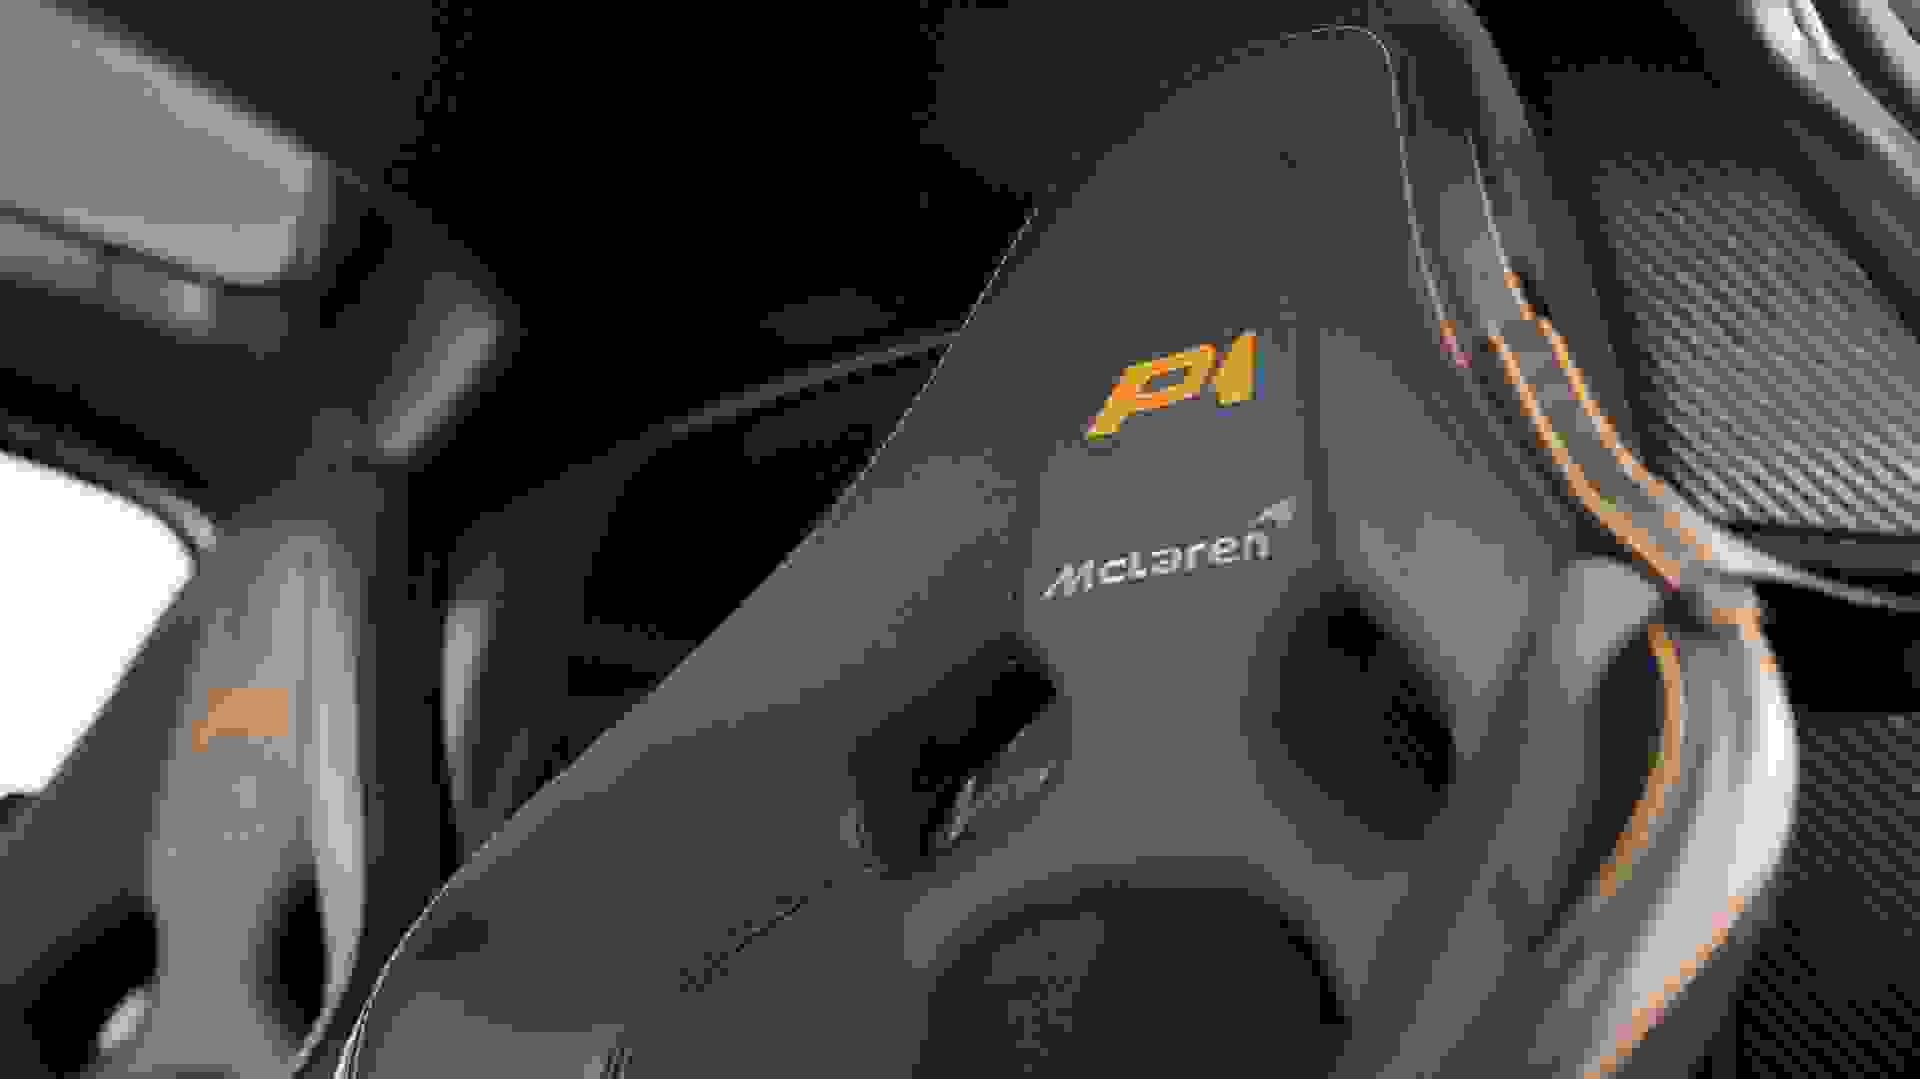 McLaren P1 Photo 0edaad2a-5043-489f-9635-7df5bb555289.jpg